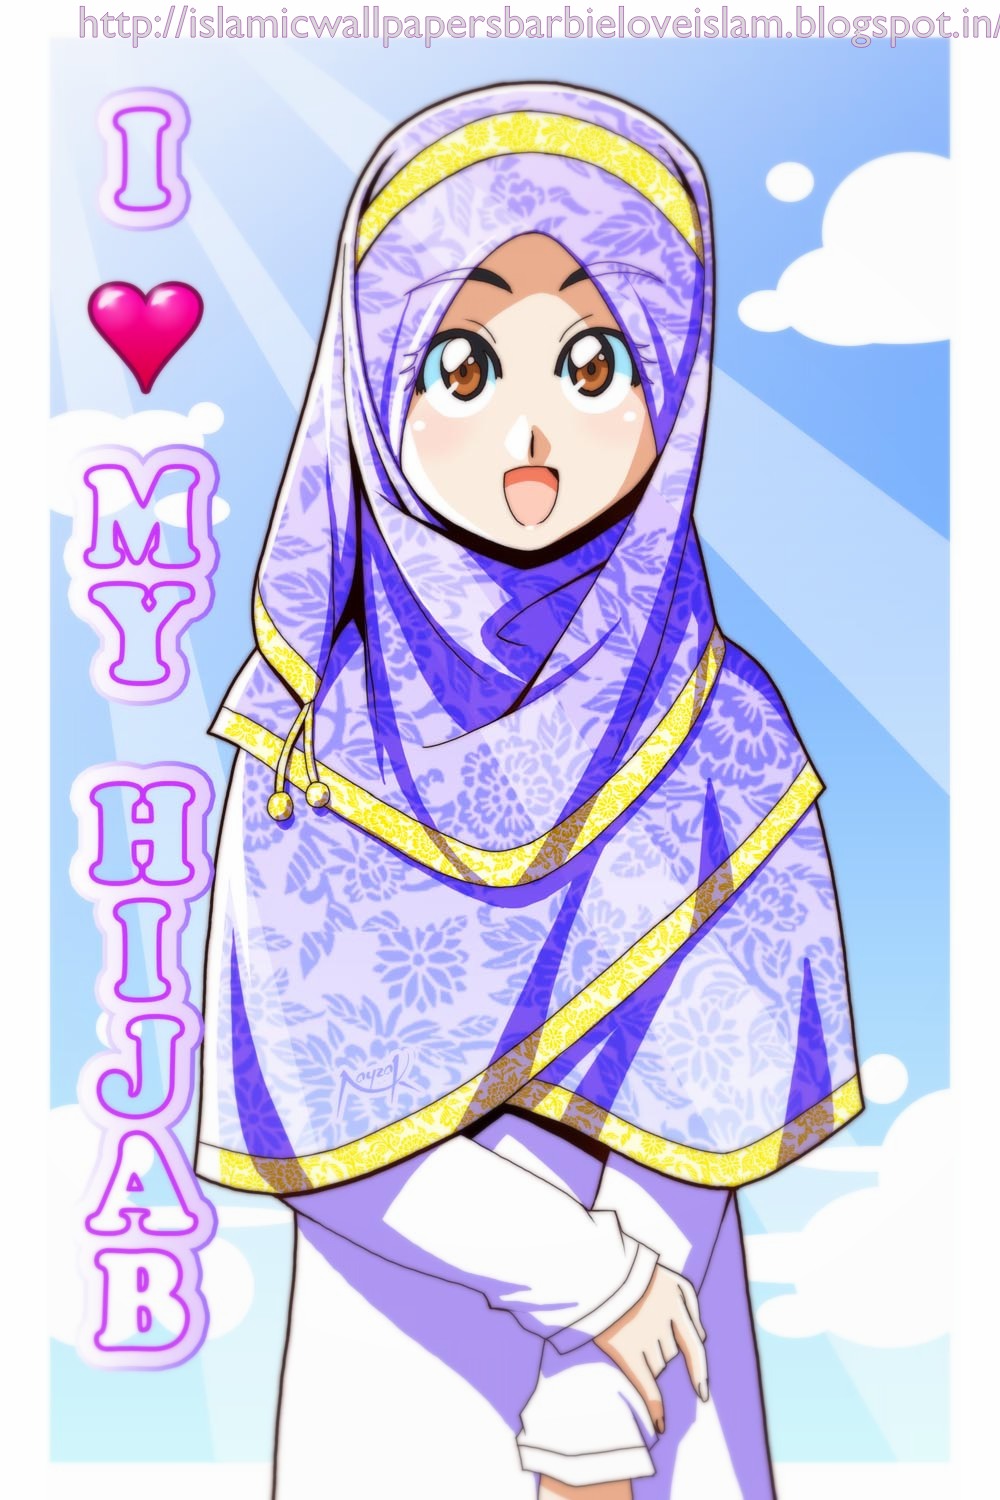 Islamic Wallpapers Barbie Loveislam I Love My Hijab